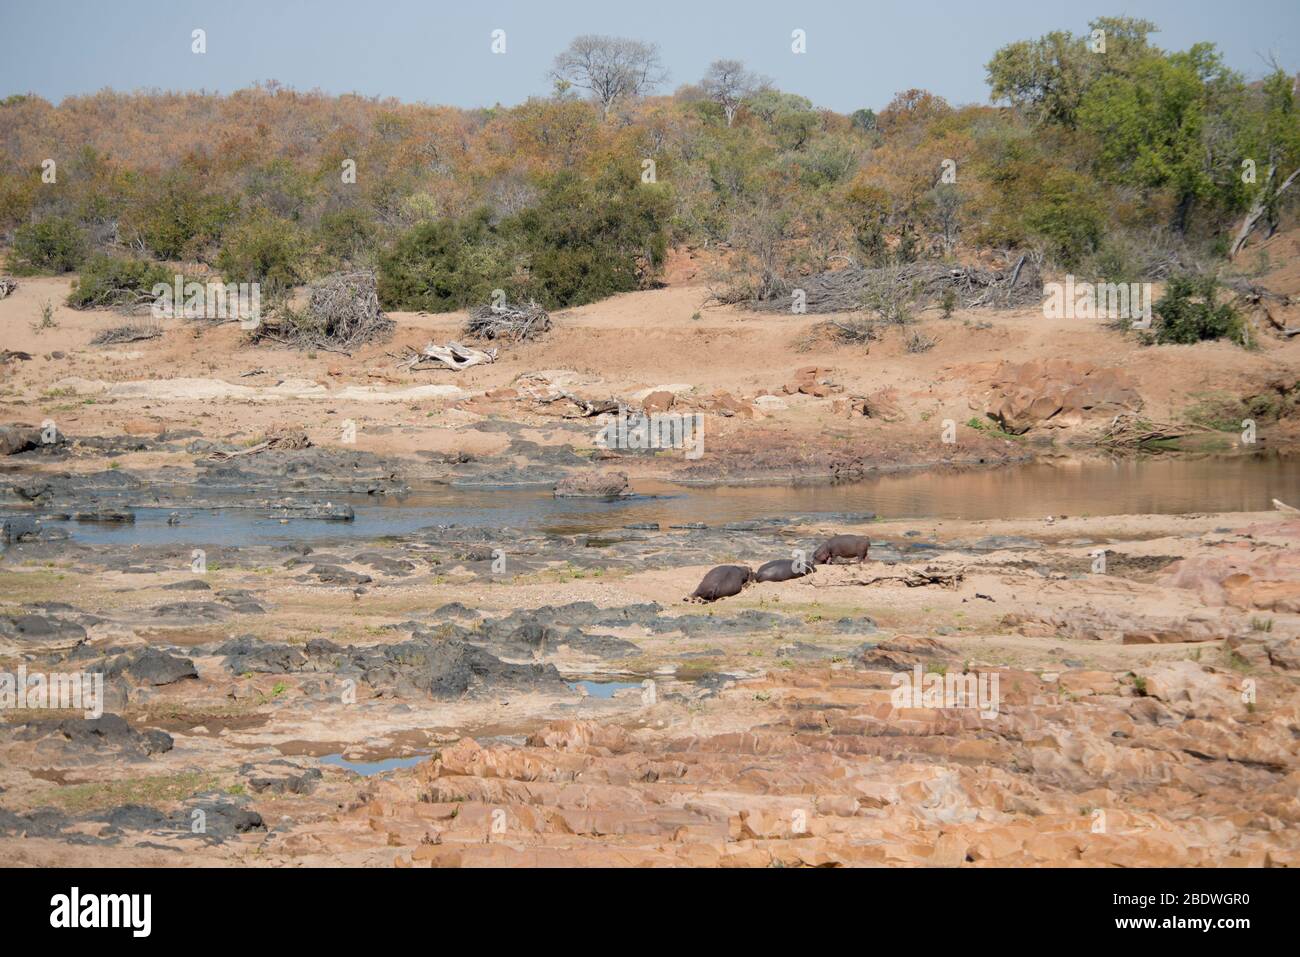 Hippopotami, Hippopotamus amphibius, Vulnerable, on river bank, Kruger National Park, Mpumalanga province, South Africa, Africa Stock Photo